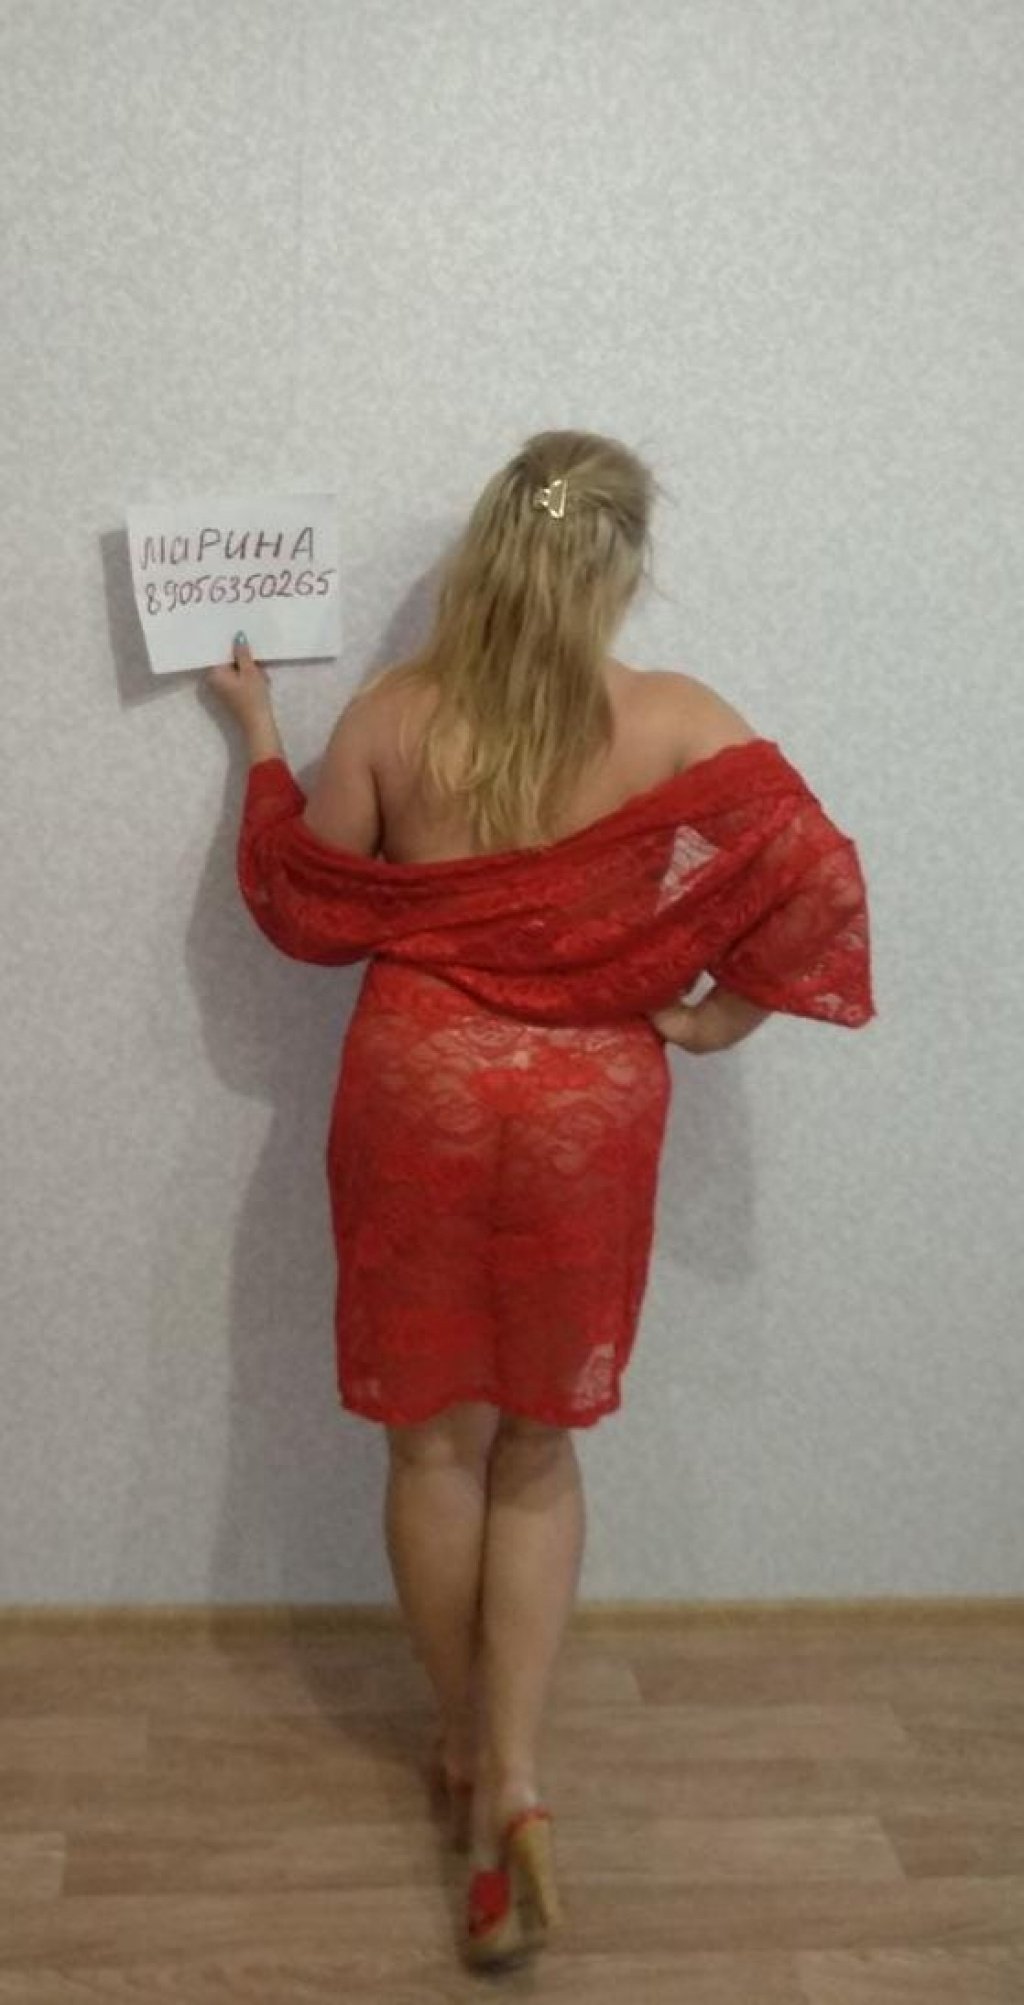  Марина: проститутки индивидуалки в Ярославле